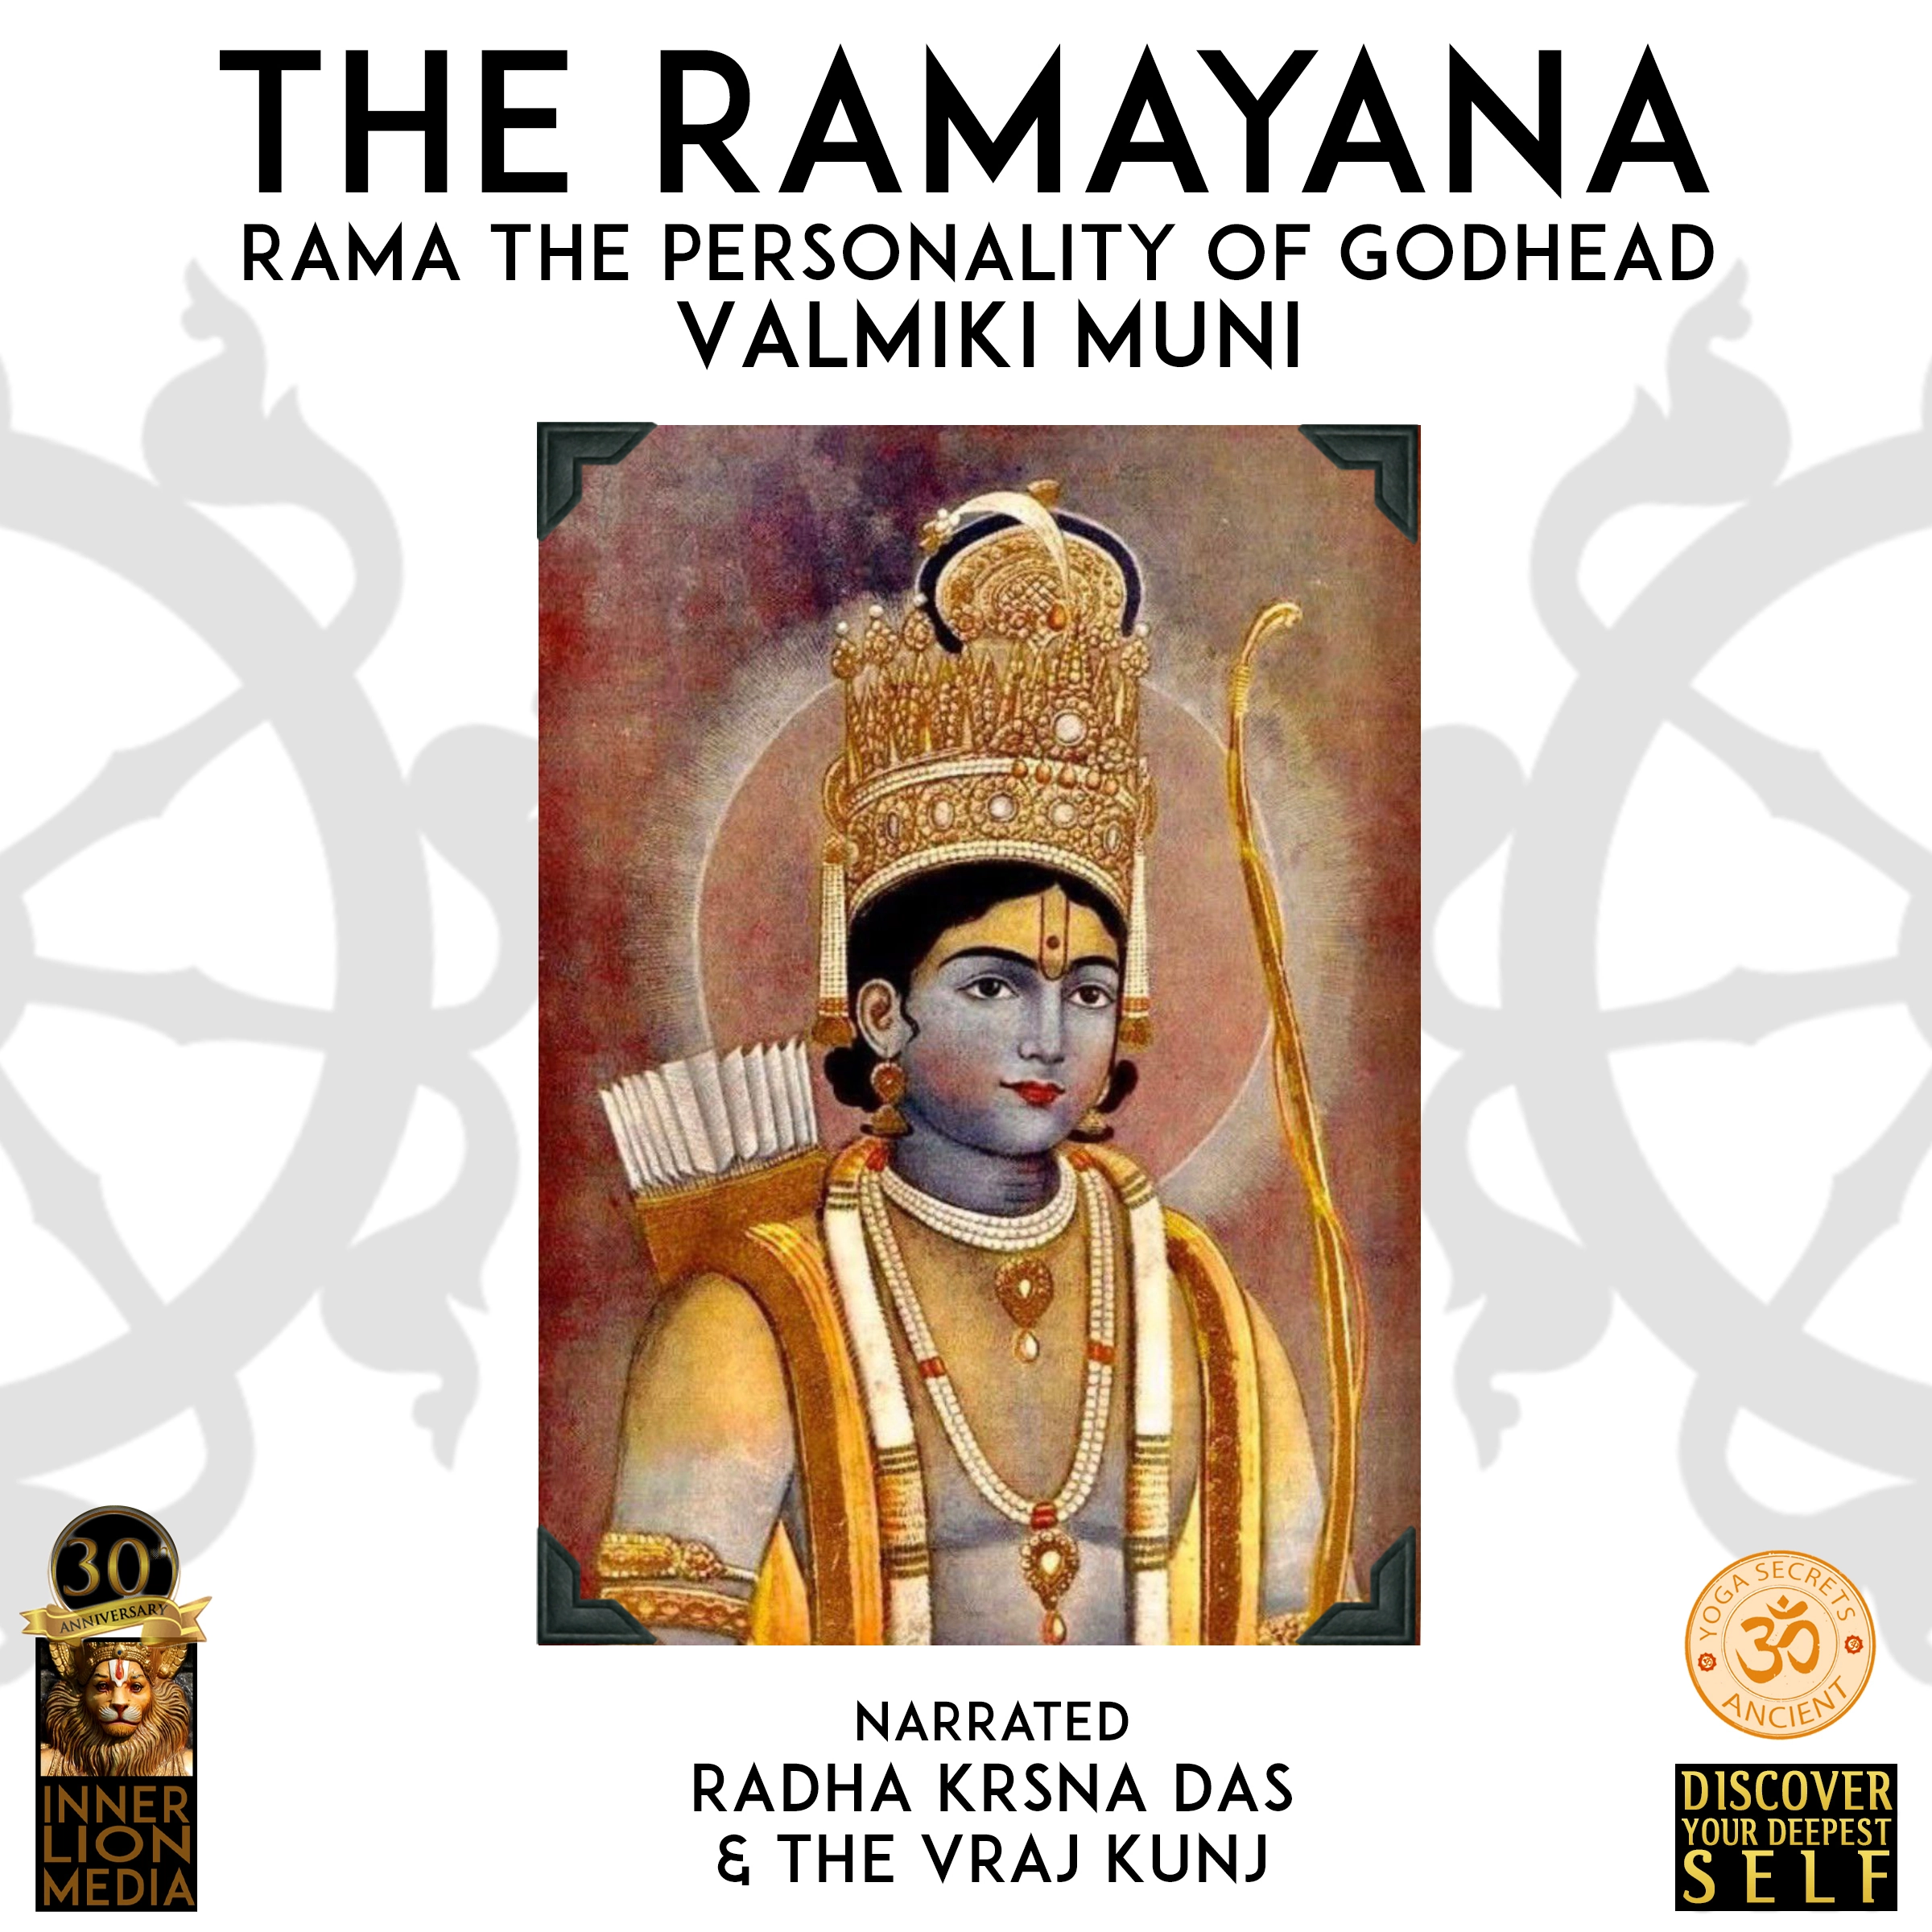 The Ramayana Audiobook by Valmiki Muni